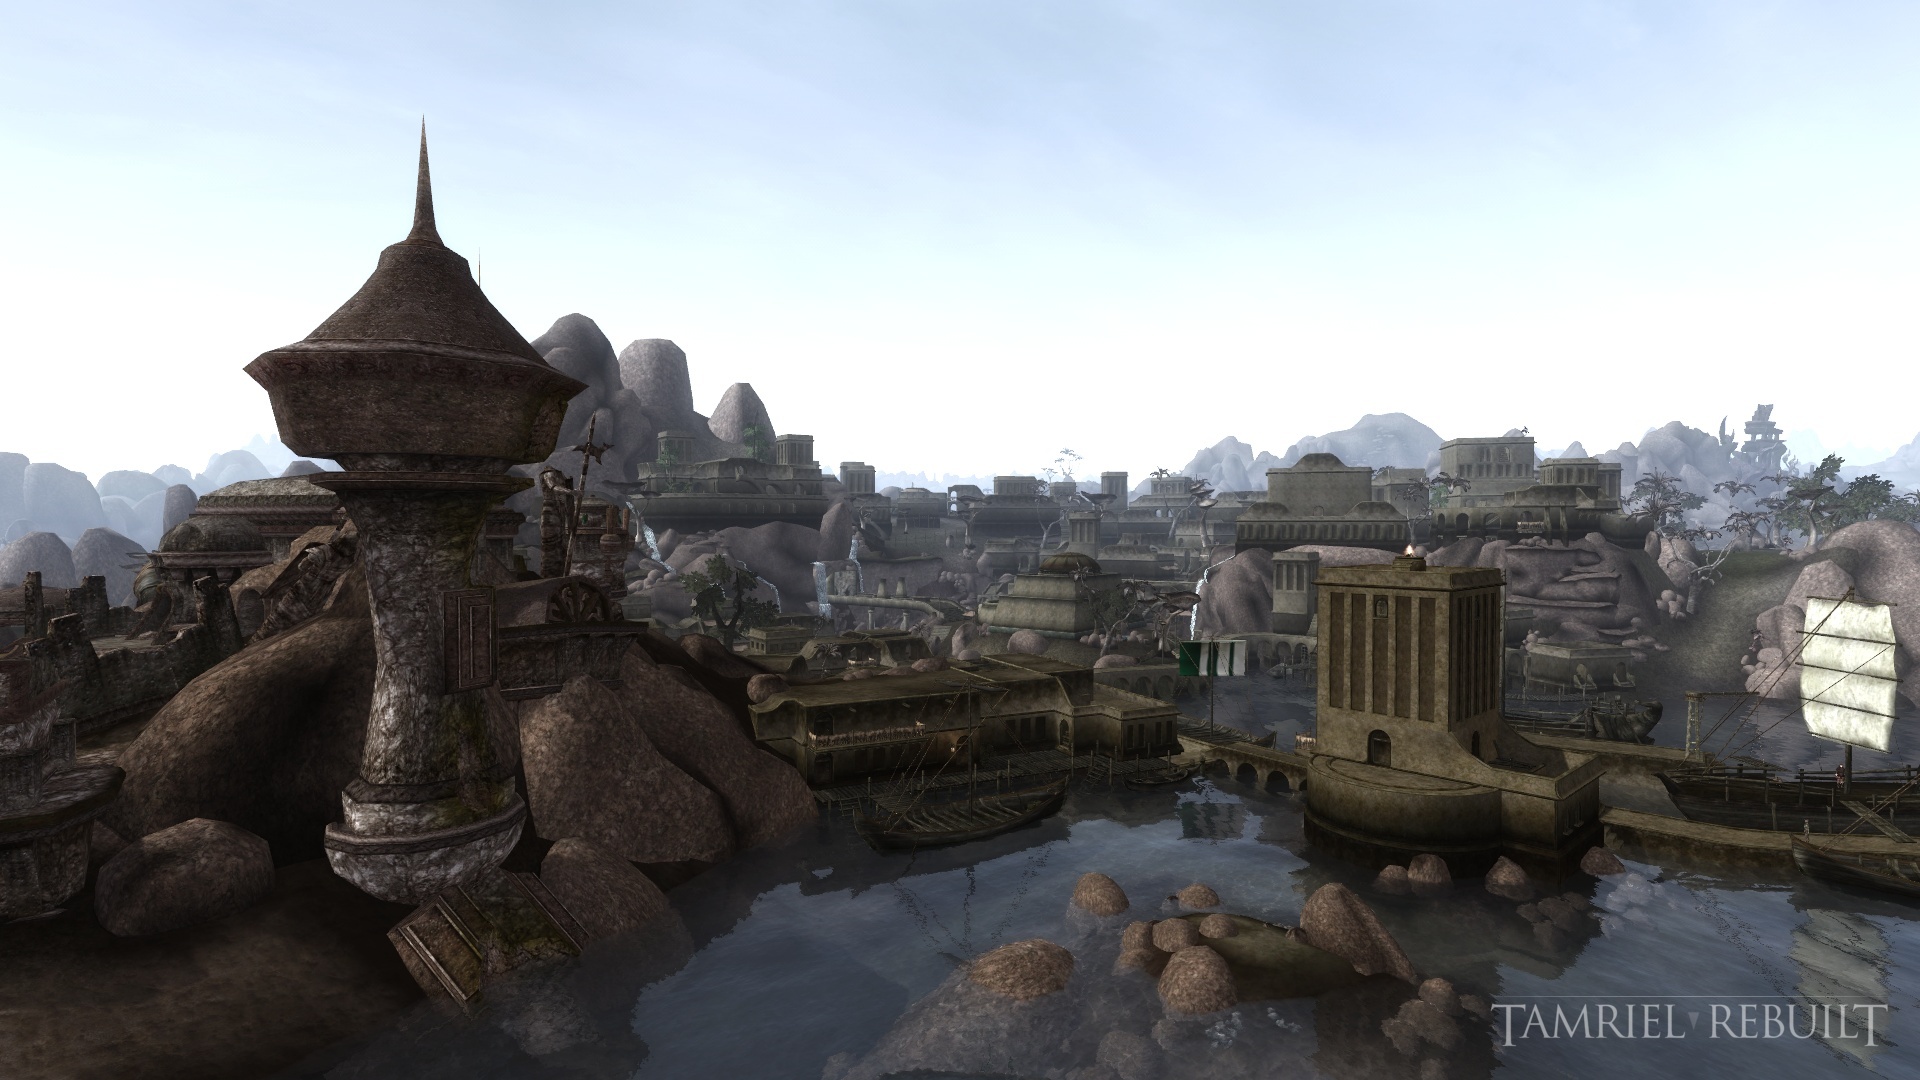 The Elder Scrolls III: Morrowind – Tamriel Rebuild